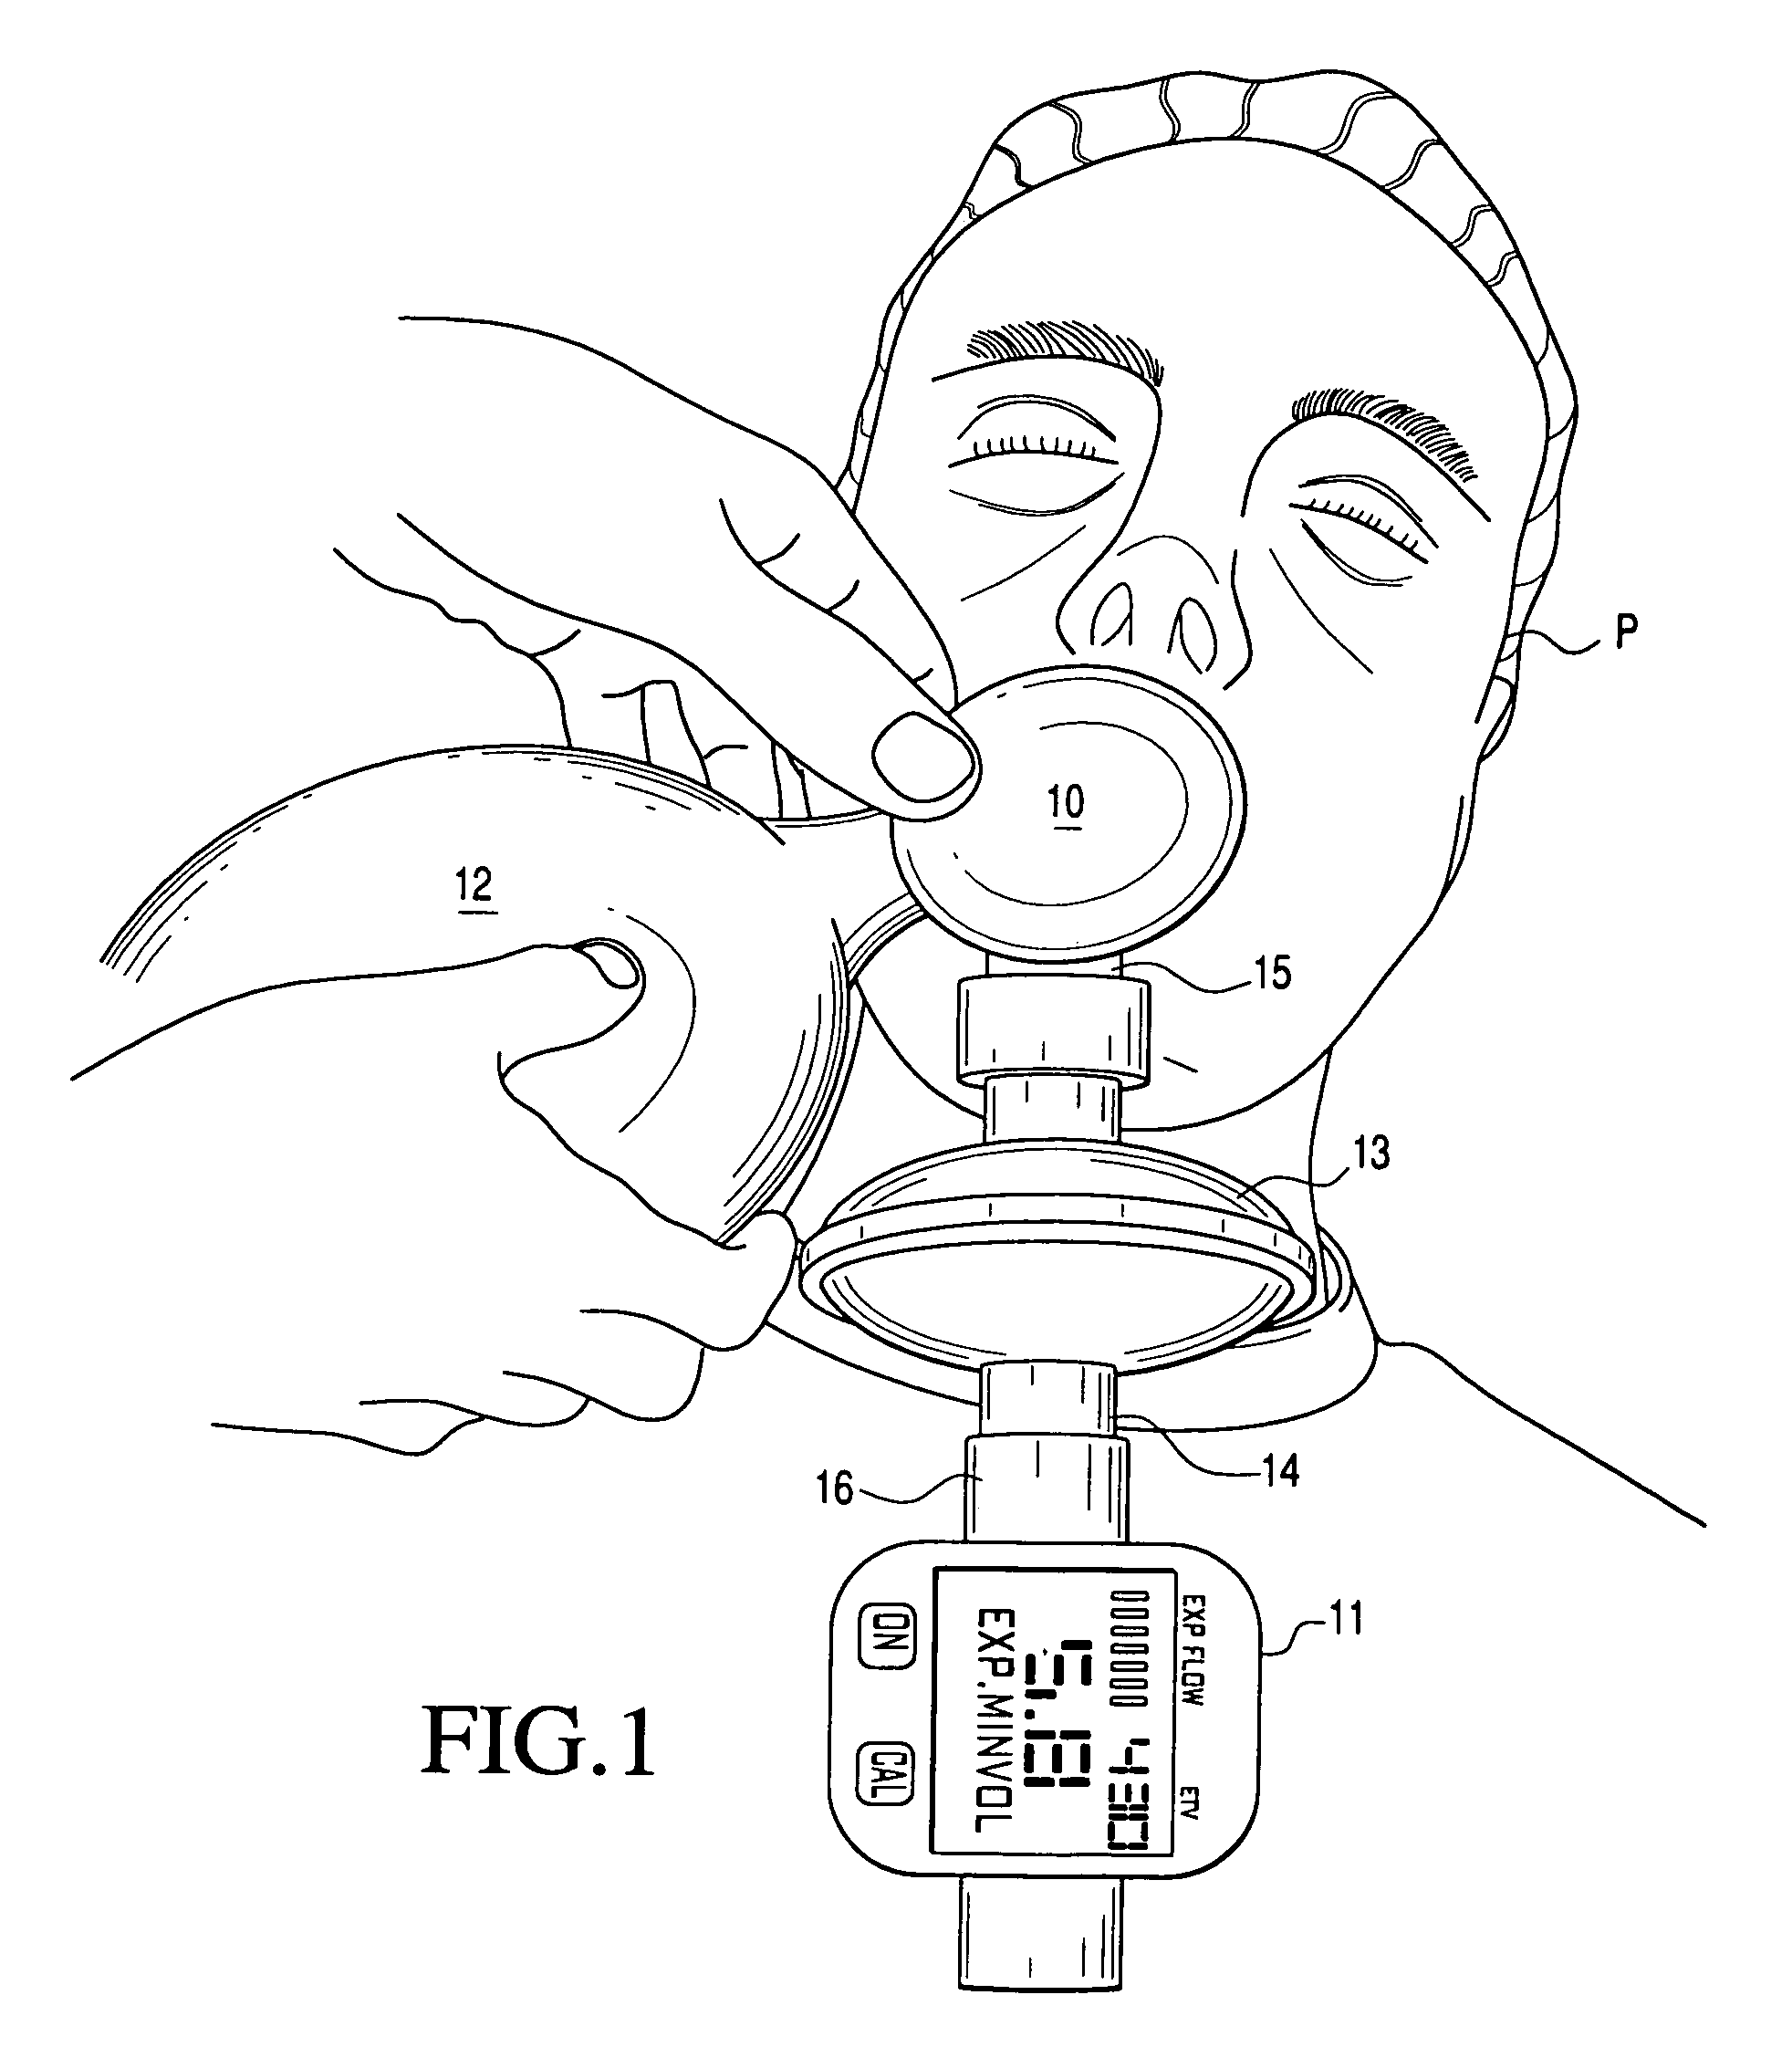 Spirometer, display and method